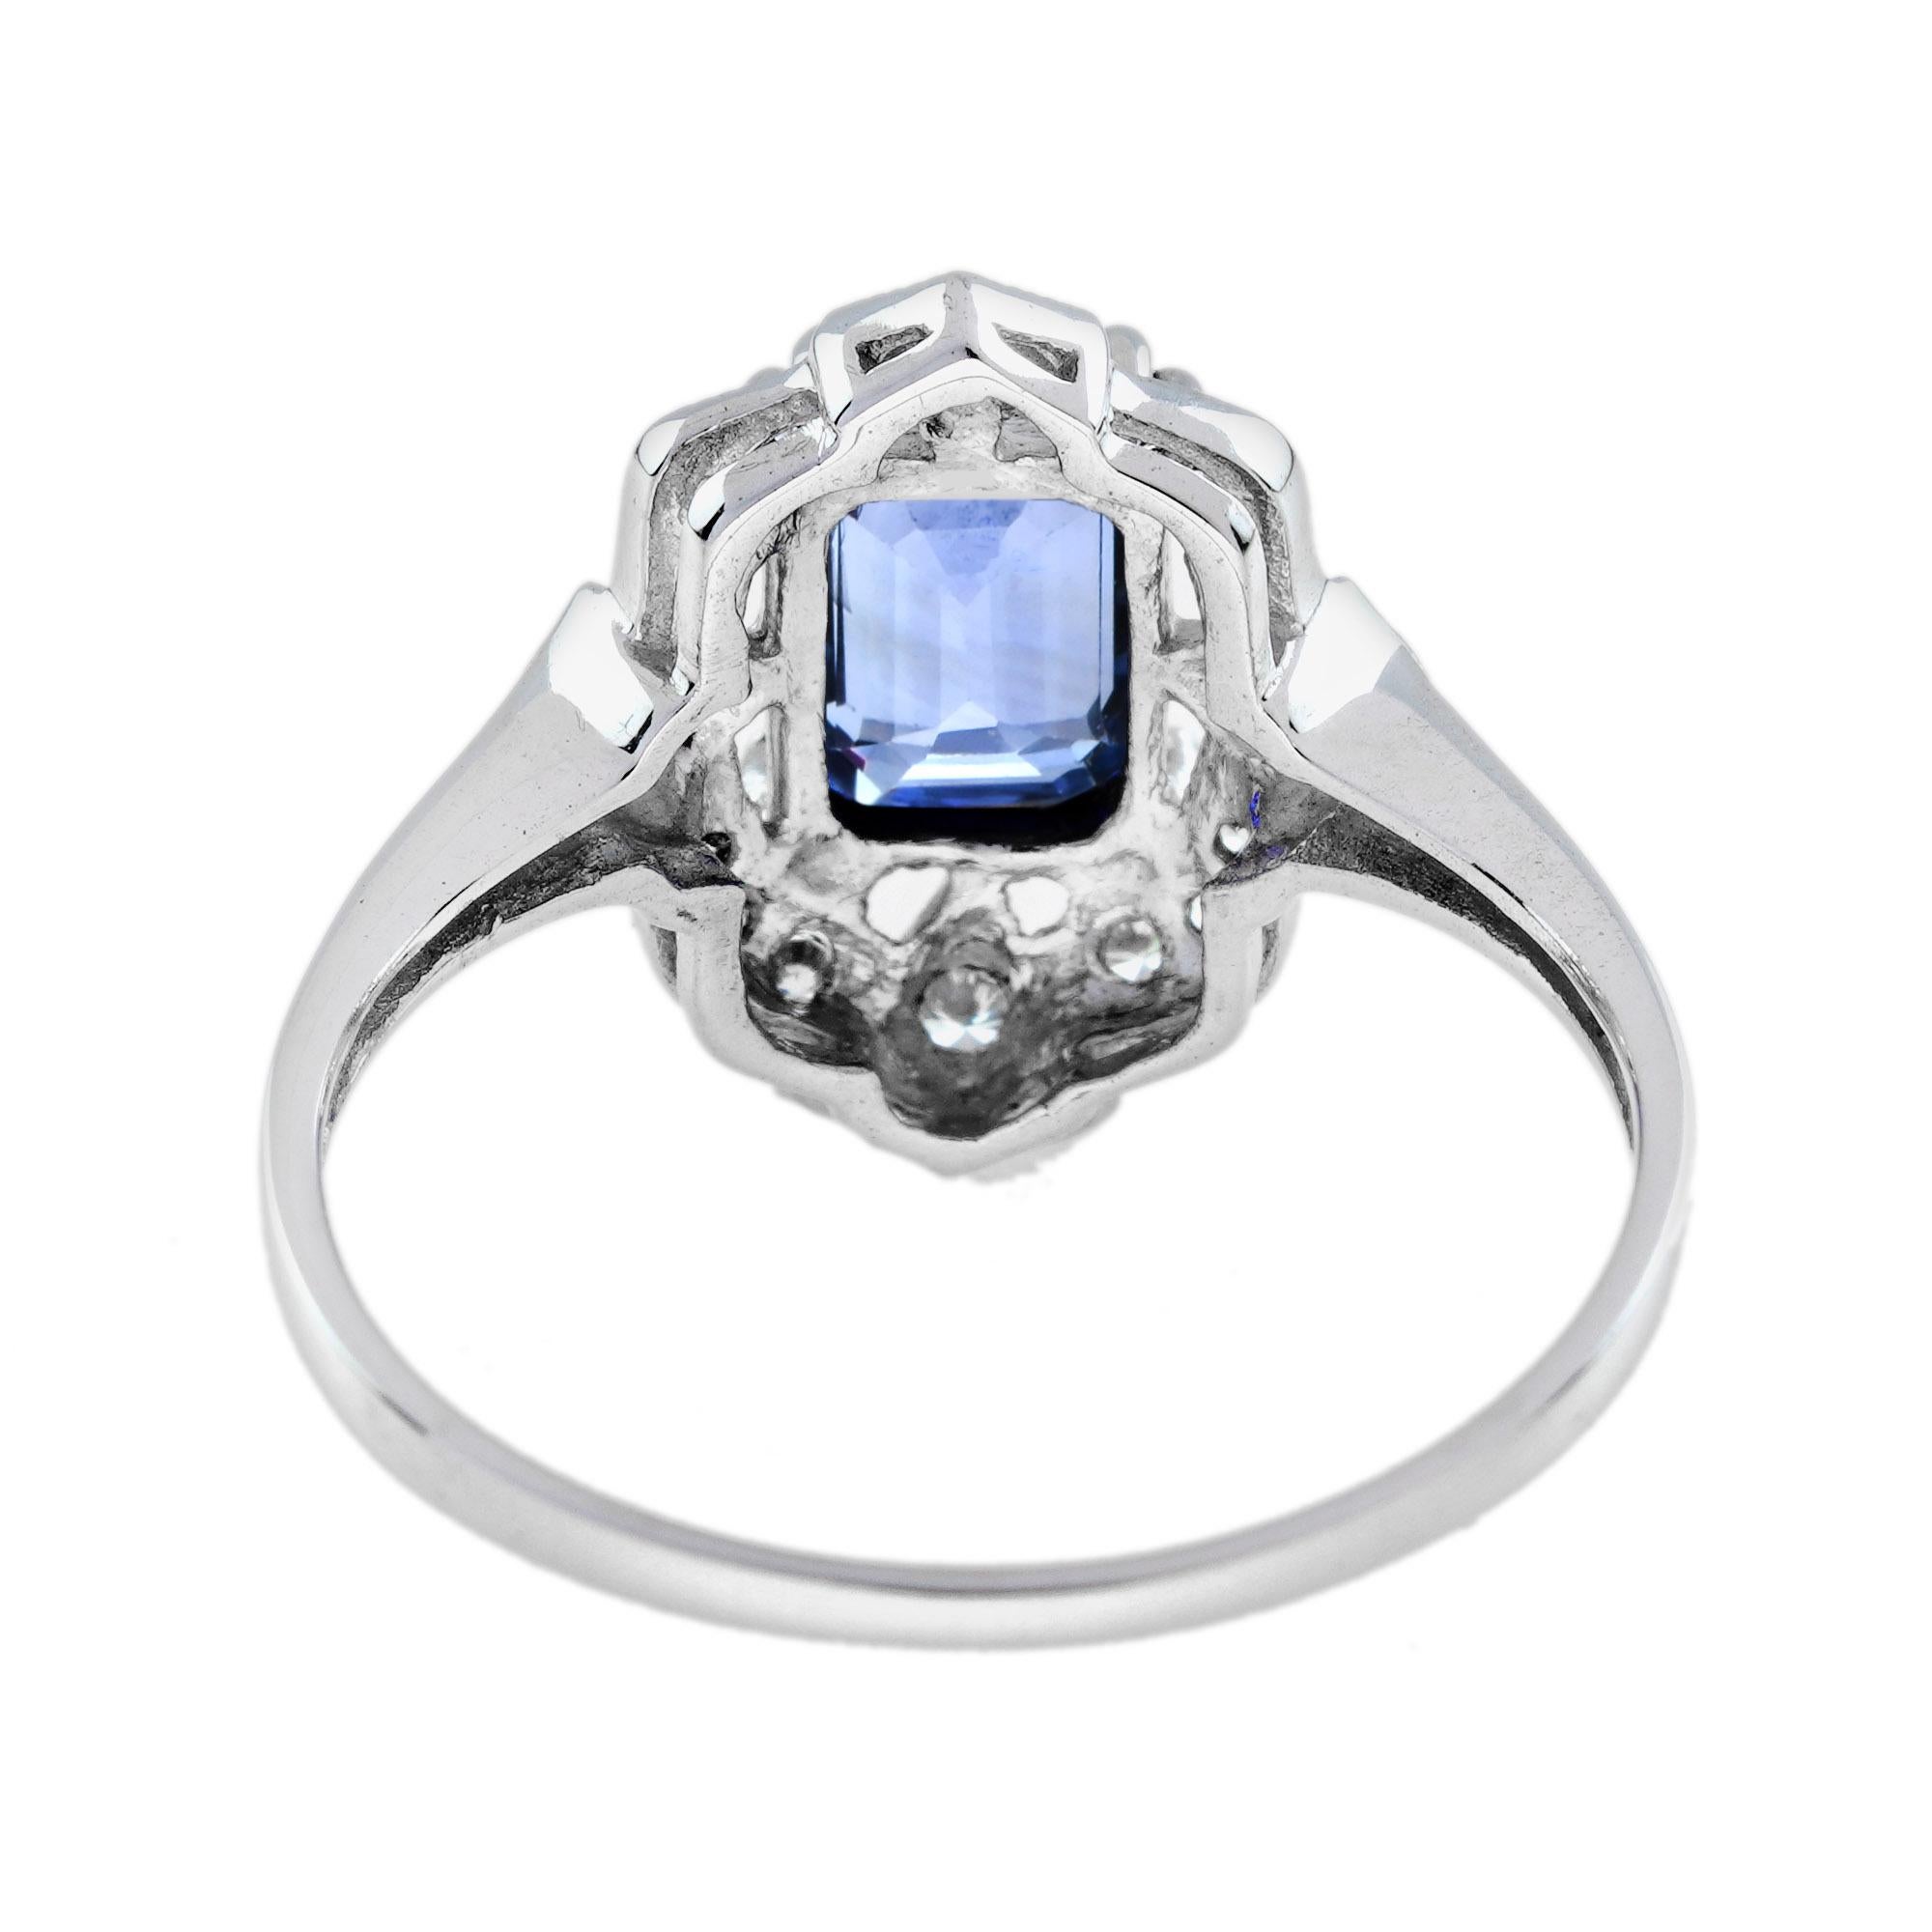 For Sale:  Emerald Cut Ceylon Sapphire and Diamond Halo Ring in 18K White Gold 5